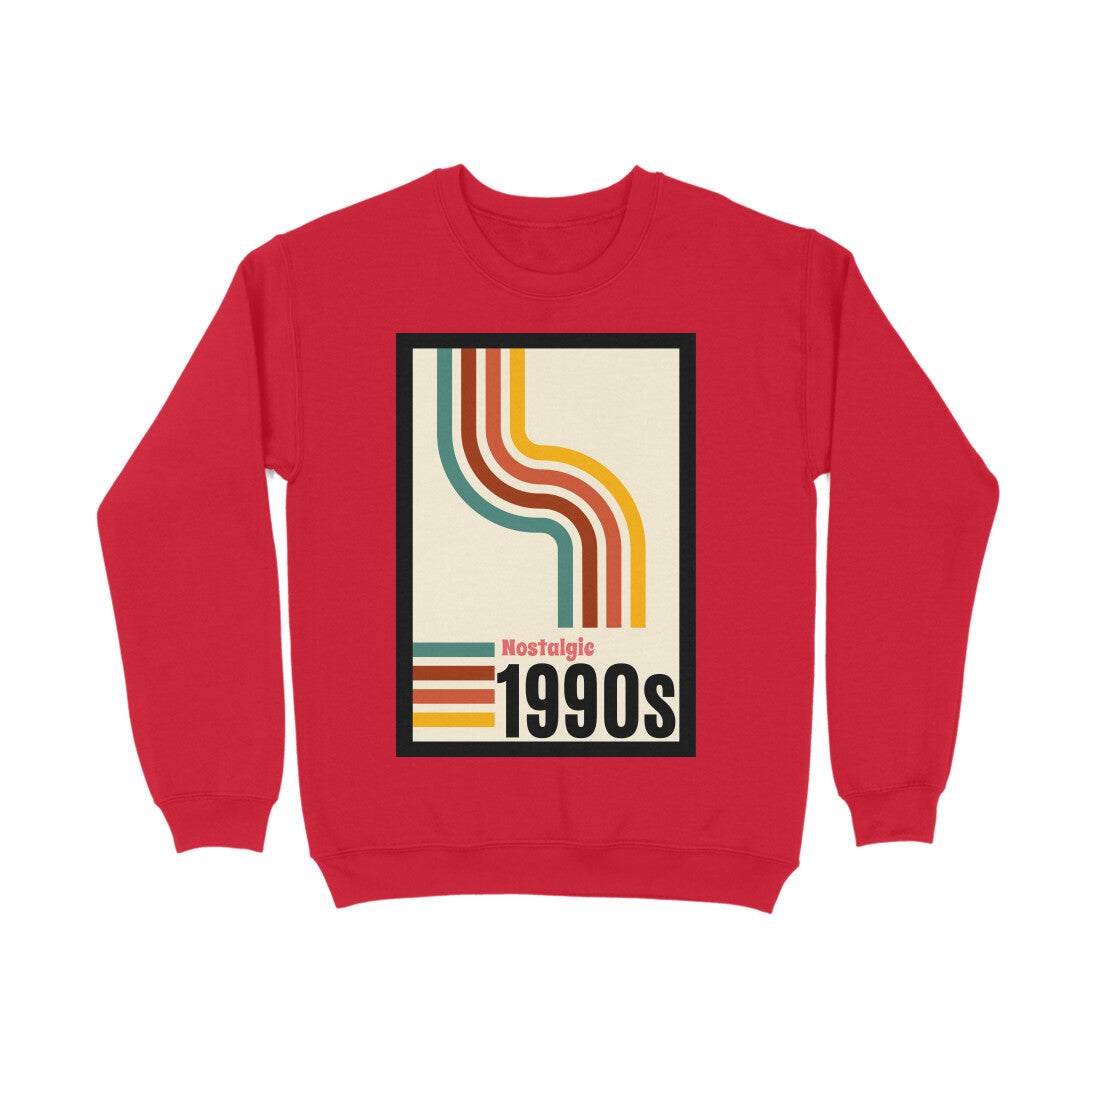 Bilkool Nostolgic 1990s Cotton Sweatshirt